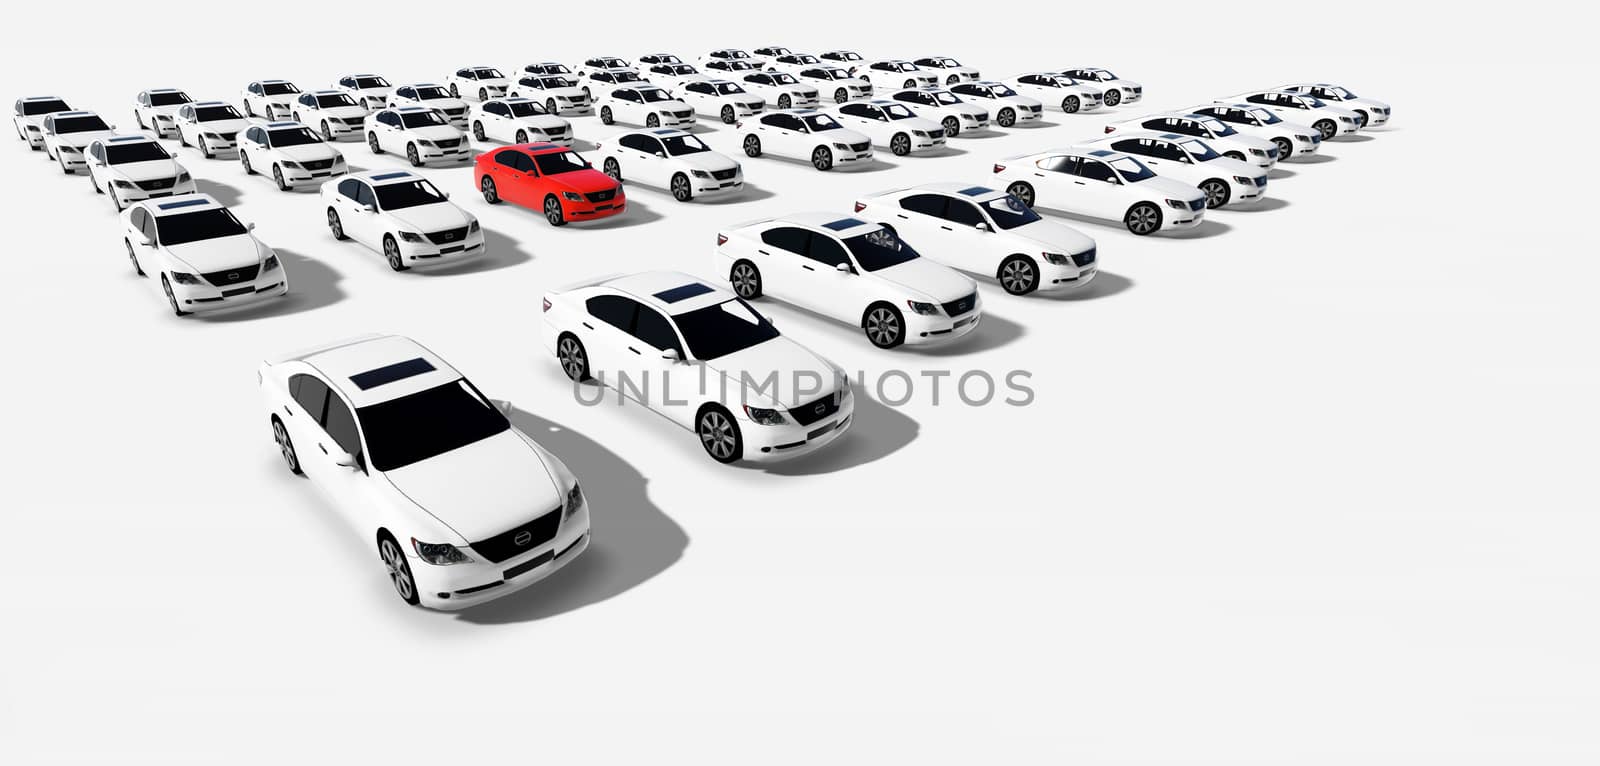 Hundreds of Cars, One Red by vitanovski